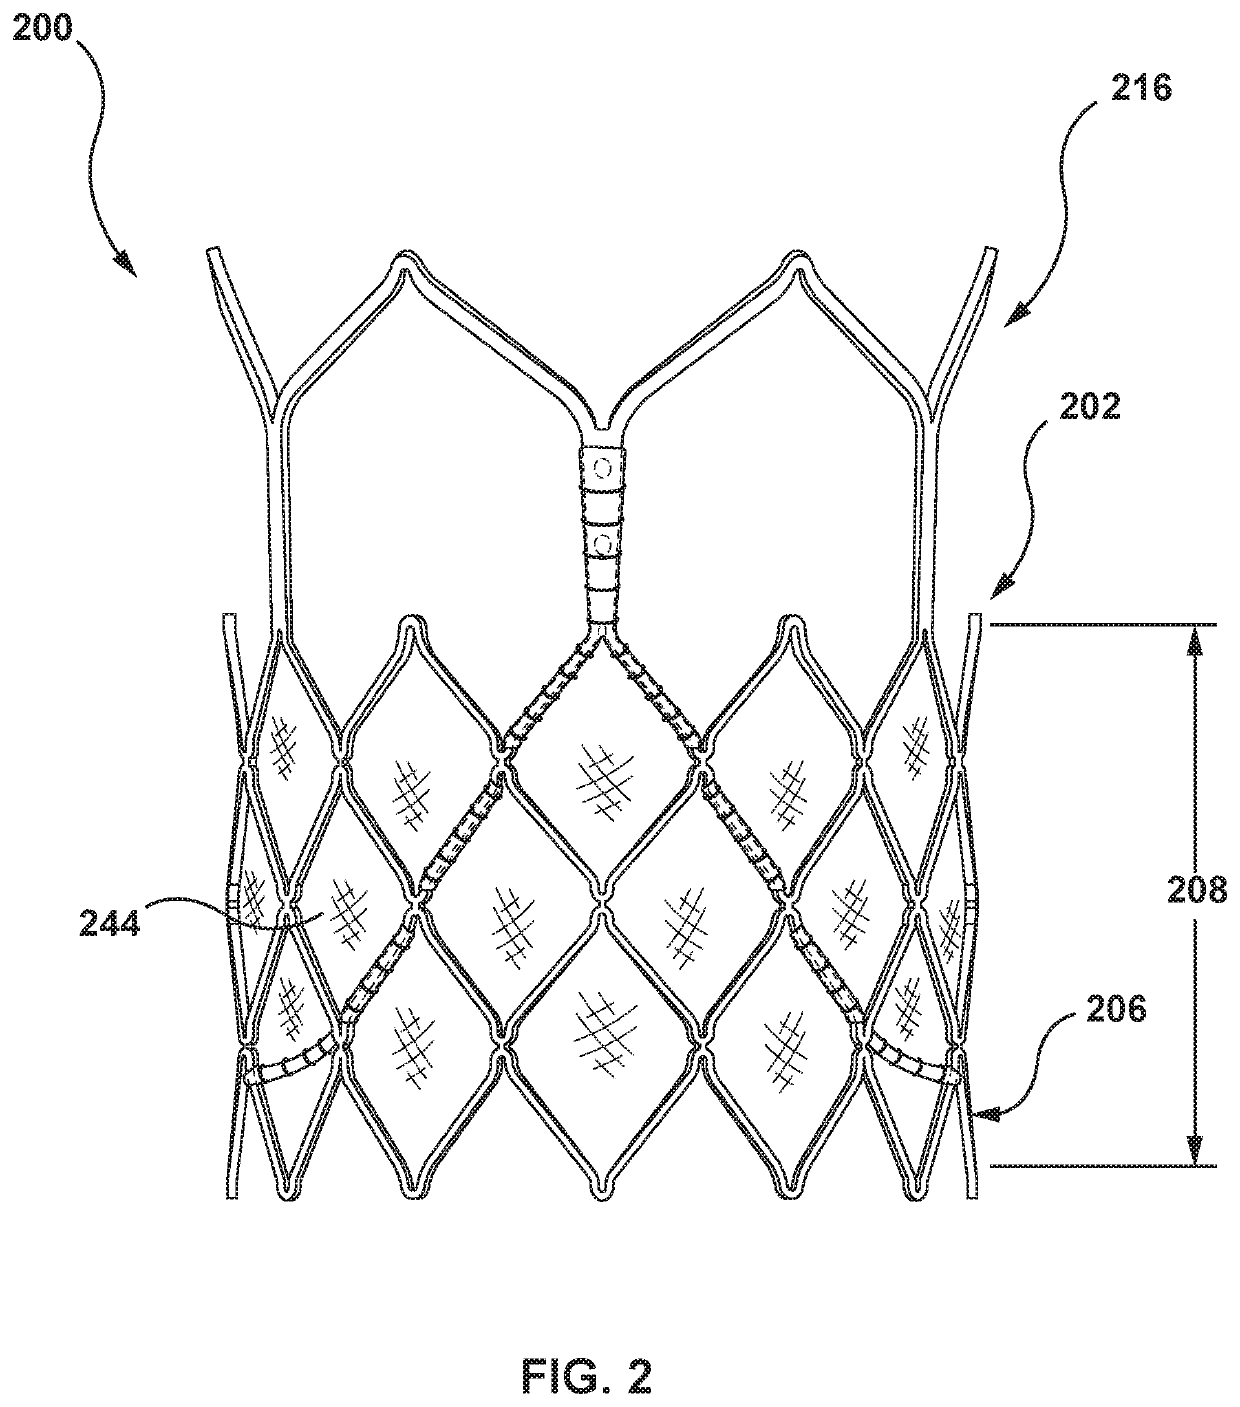 Balloon expandable frame for transcatheter implantation of a cardiac valve prosthesis